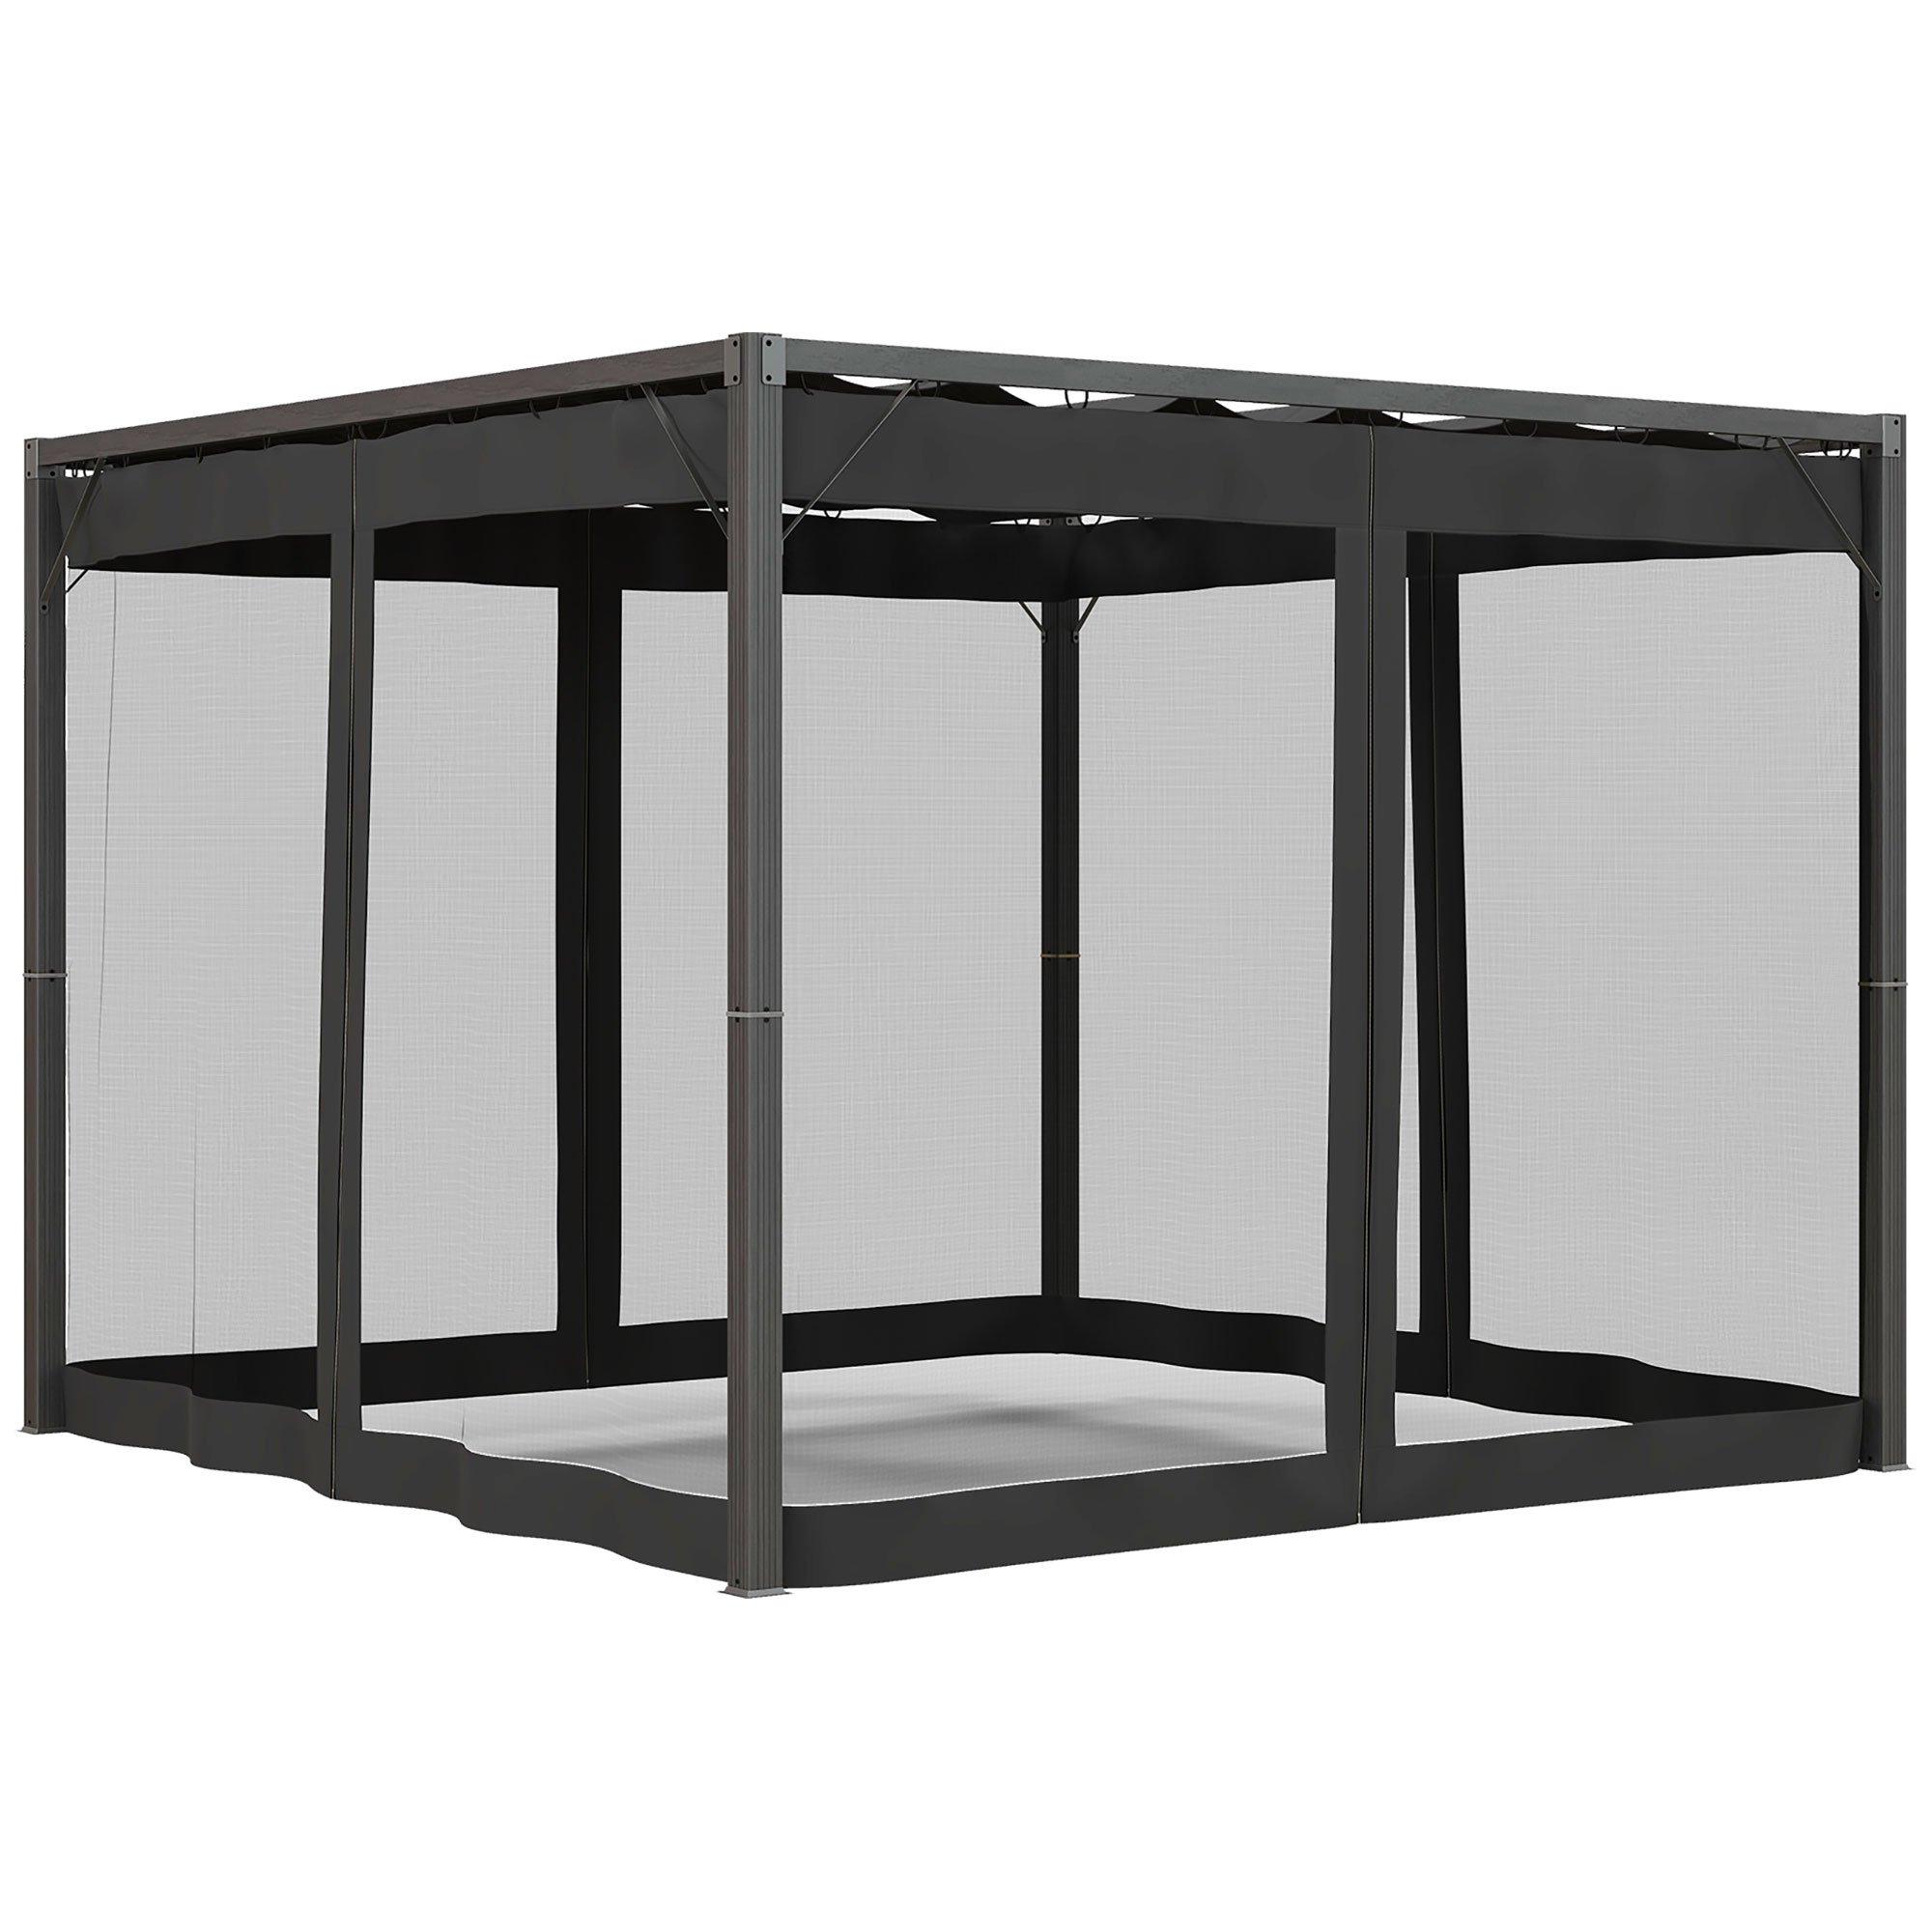 3 x 3 m Retractable Pergola Canopy with Netting, Metal Frame, Dark Grey